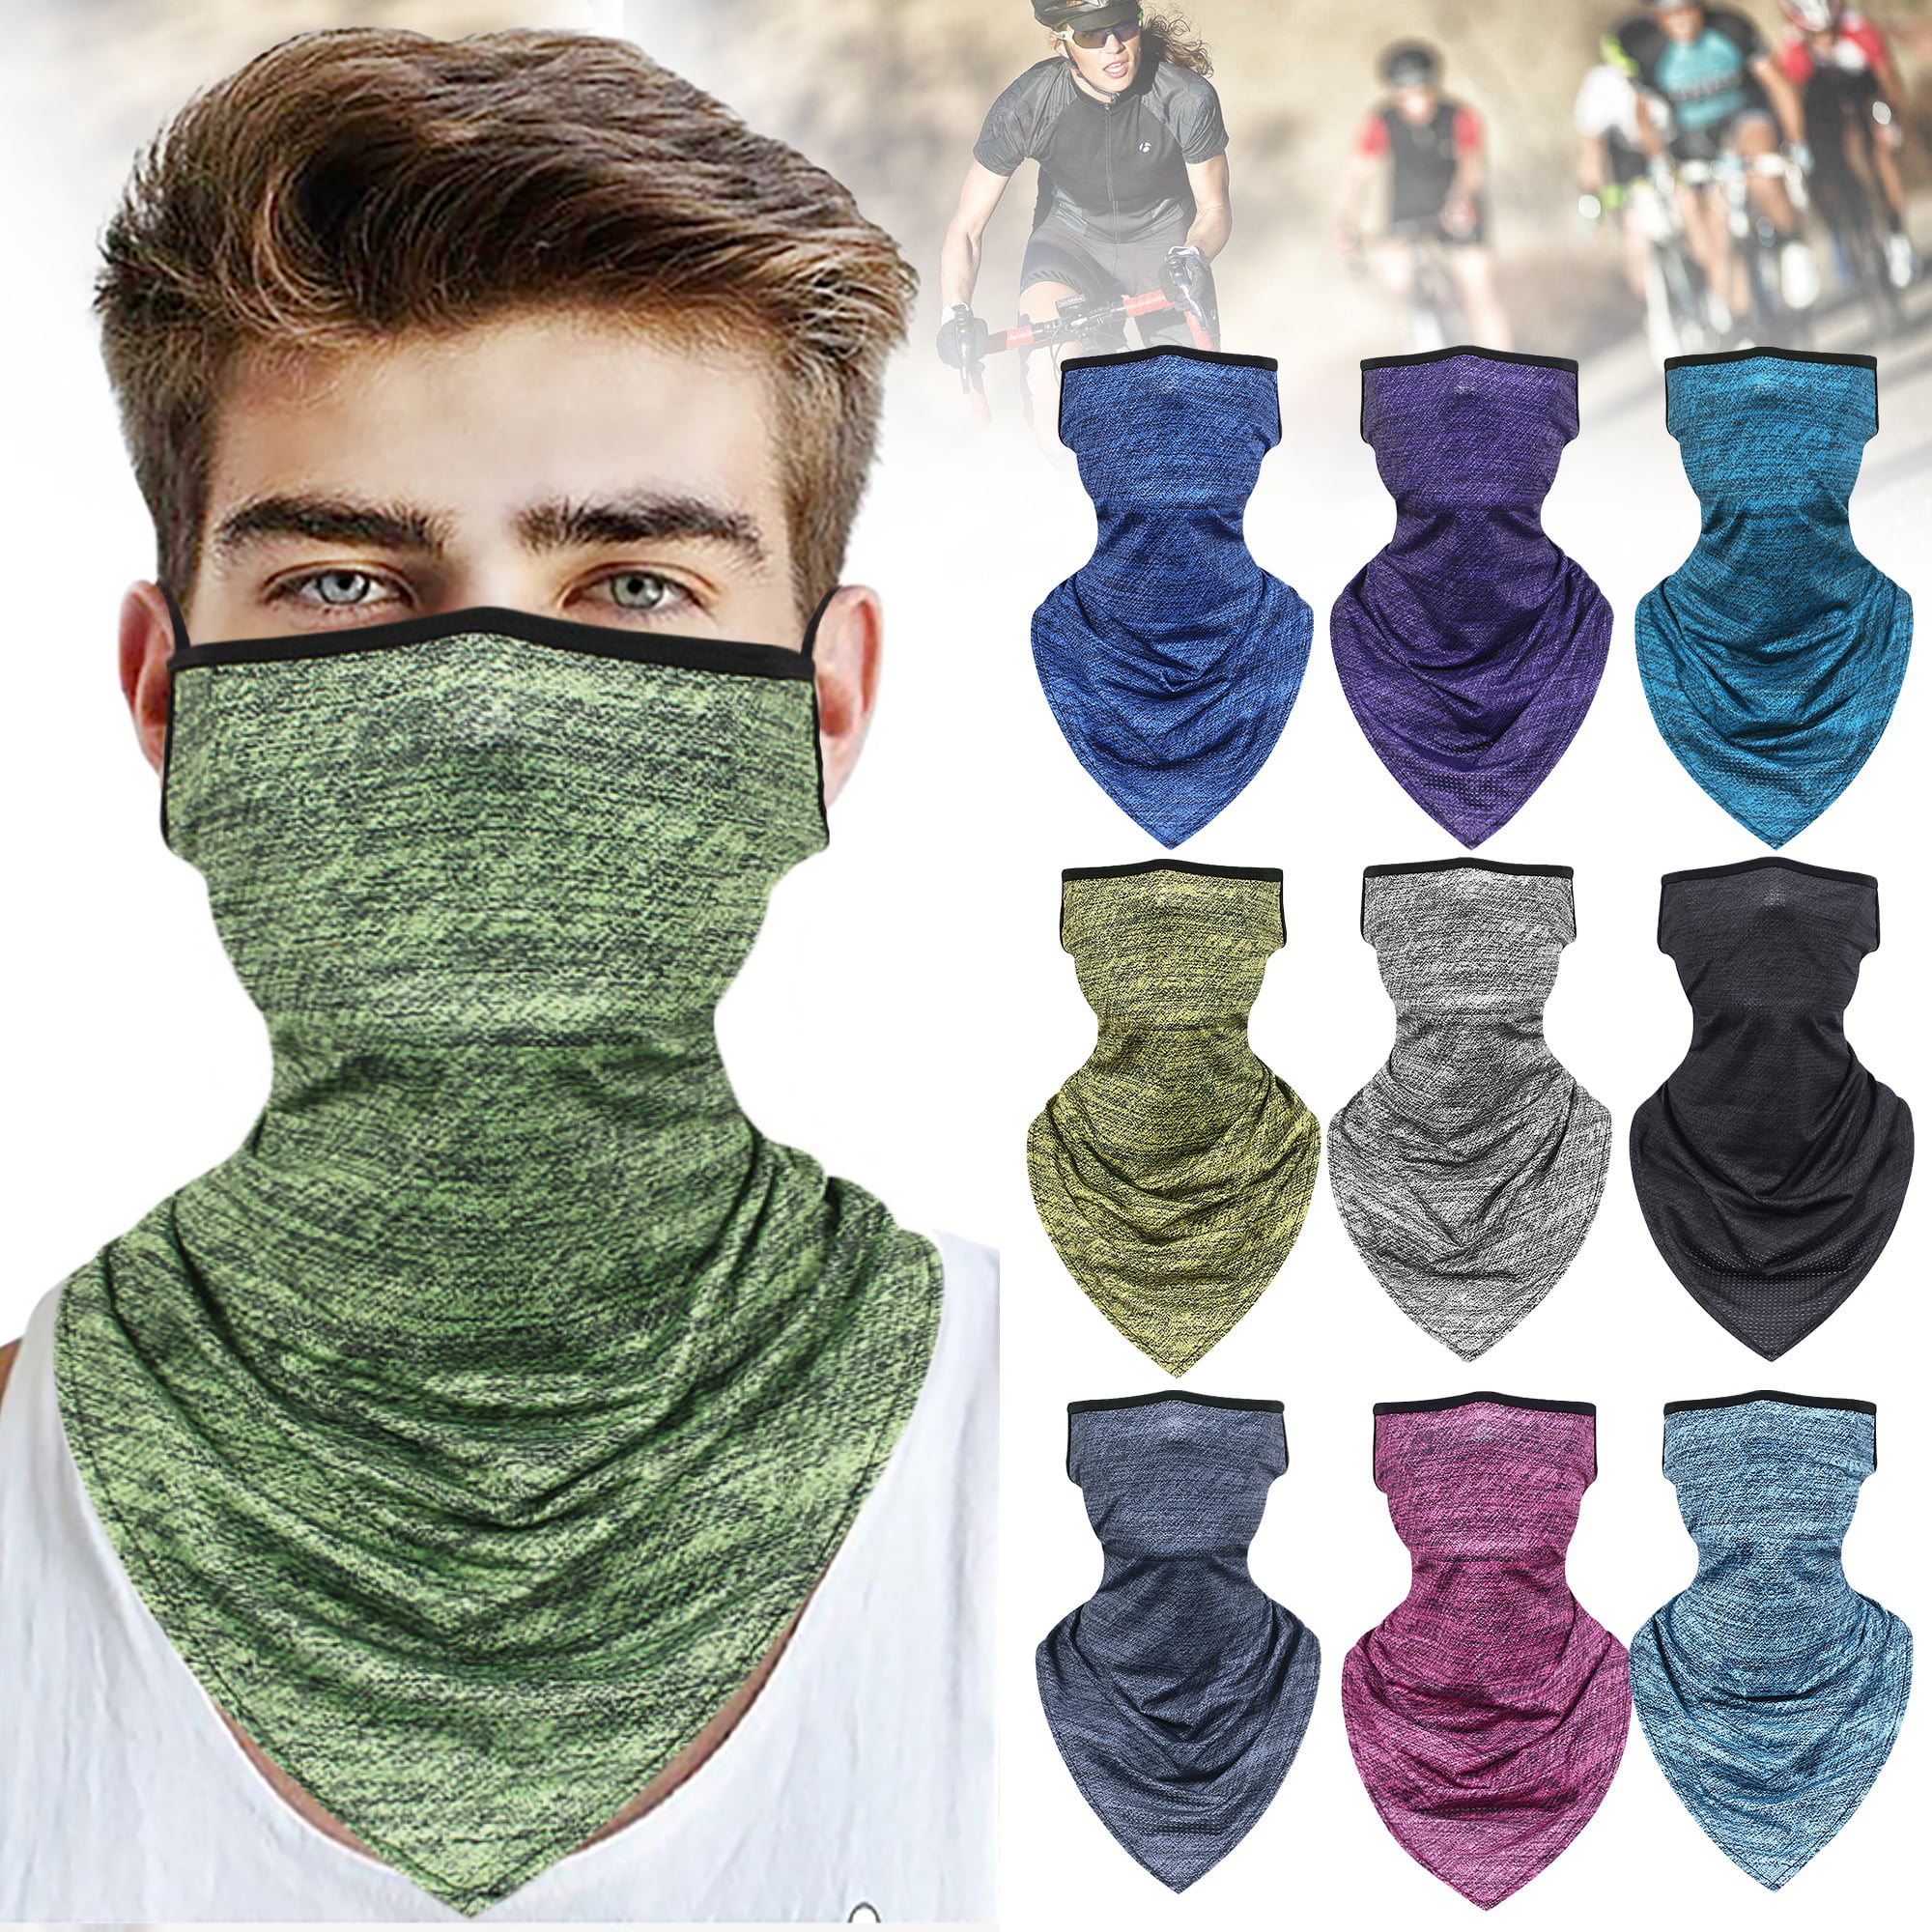 Details about   Cooling Neck Gaiter Face Mask Bandana Balalclava Face Cover Scarf for Men Women 